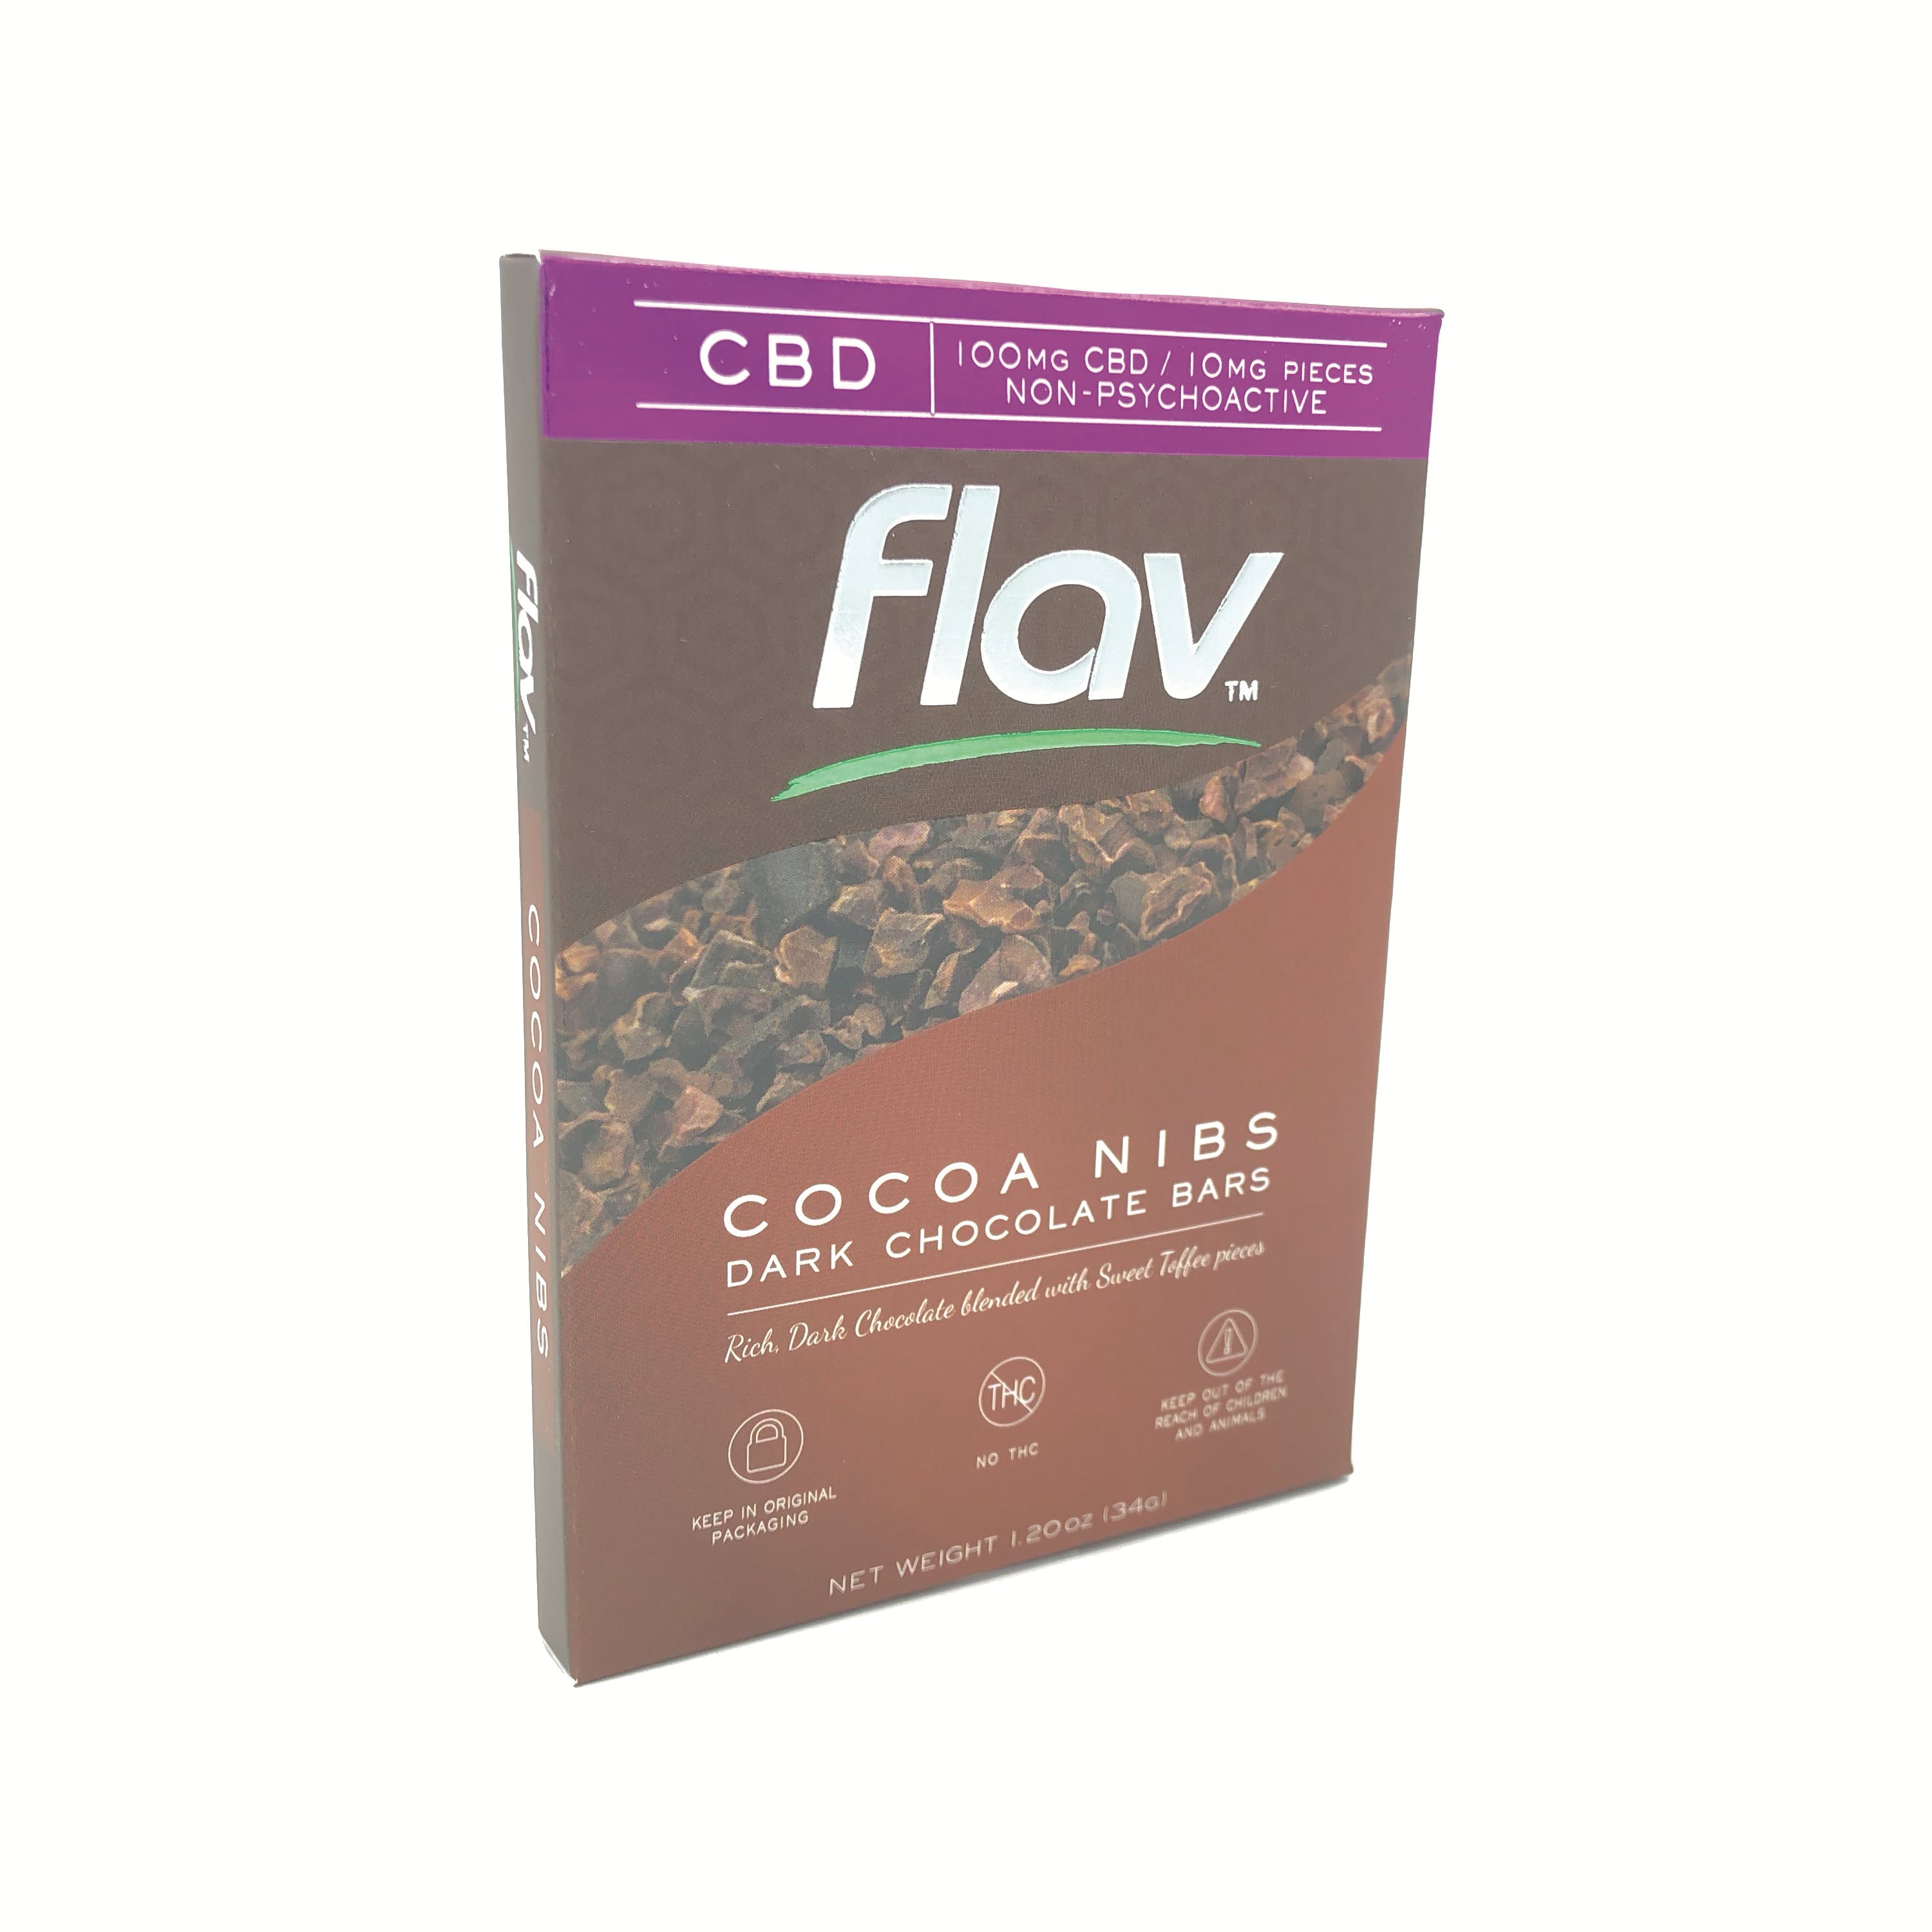 edible-flav-cbd-chocolate-bar-cocoa-nibs-100mg